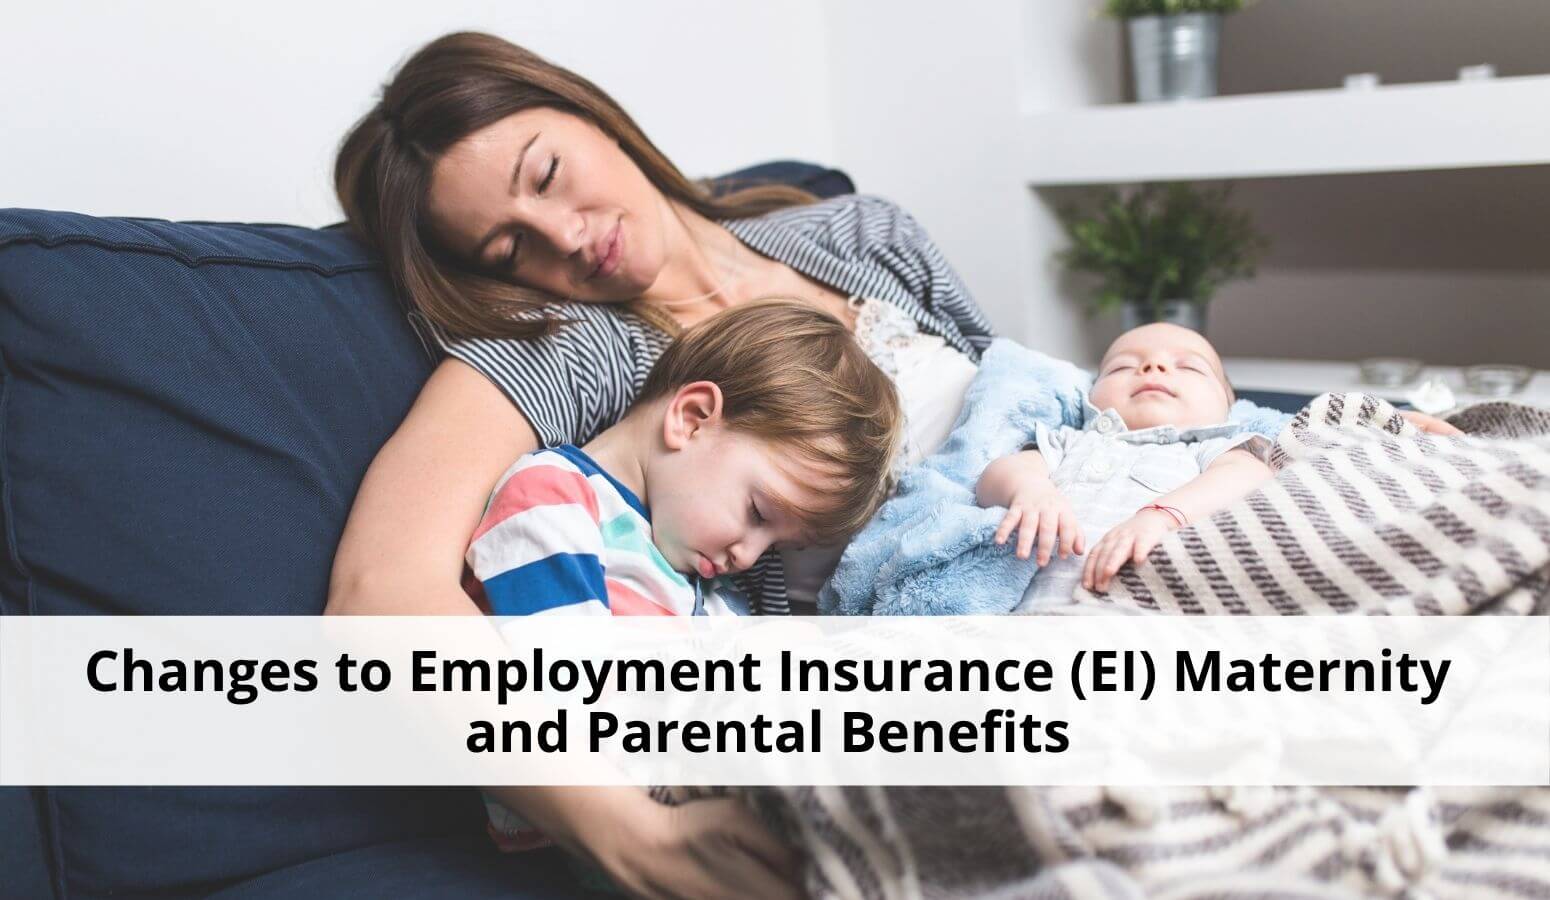 EI maternity and parental benefits